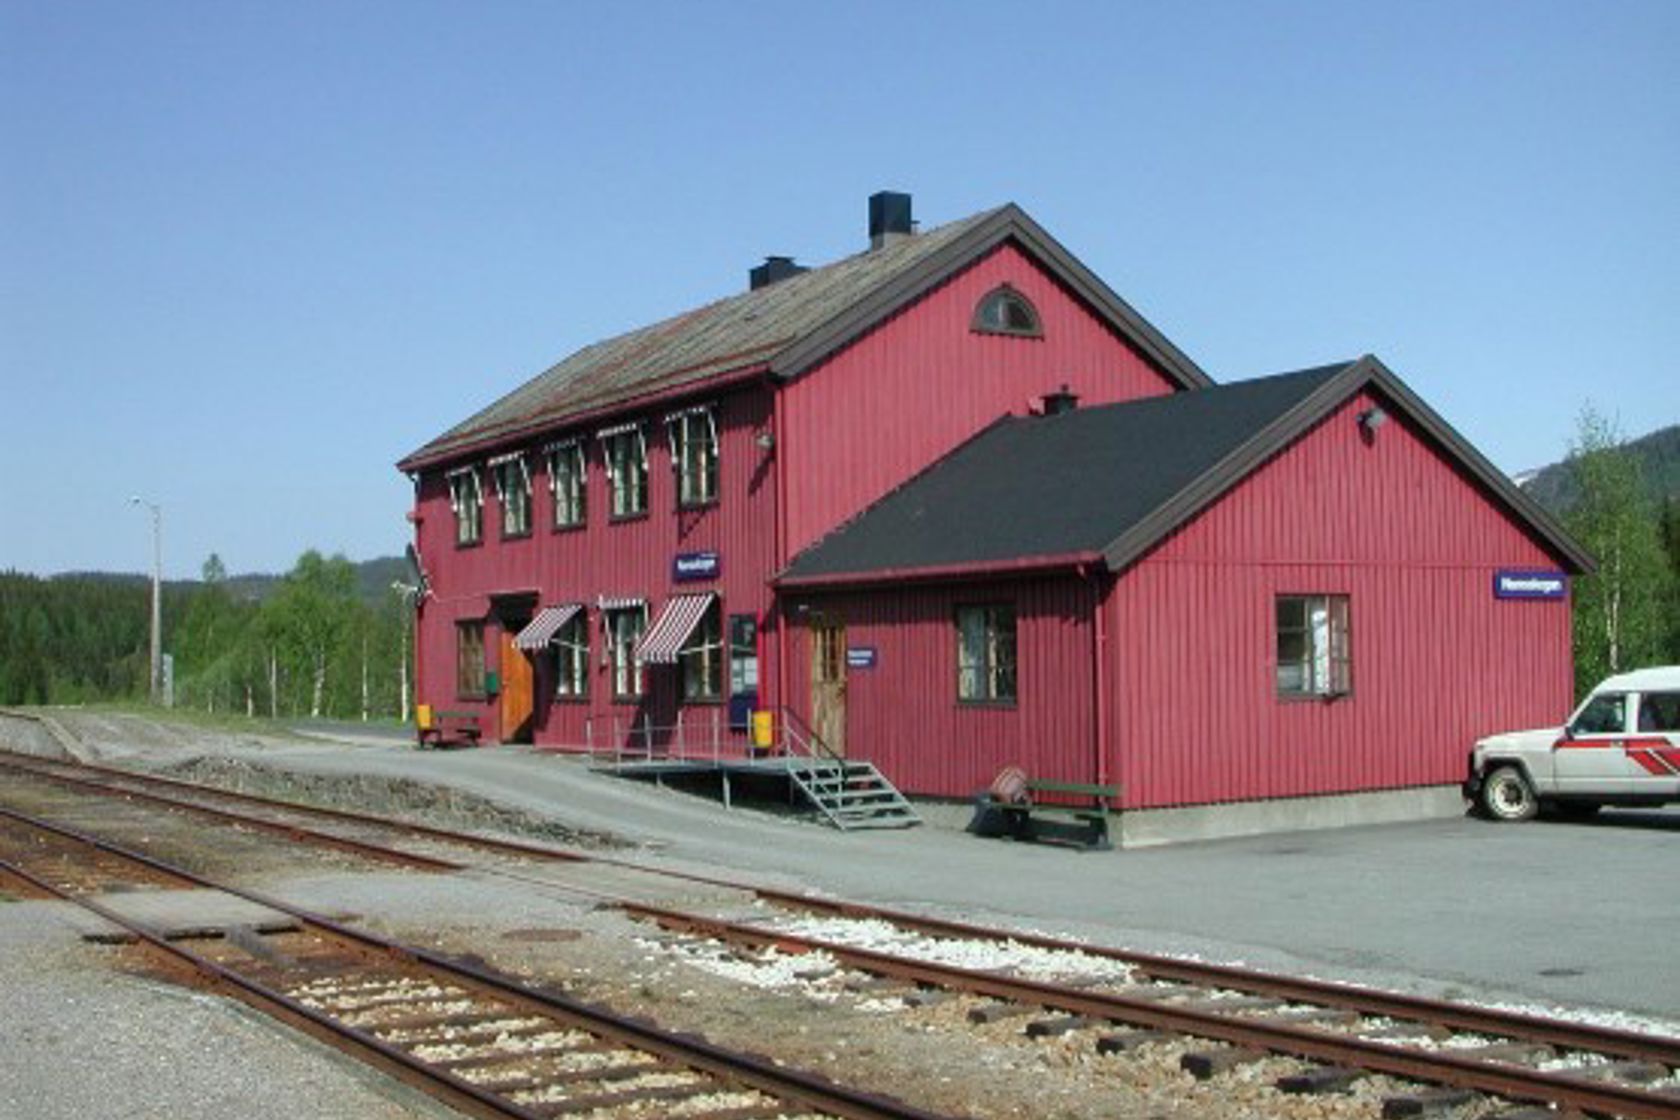 Exterior view of Namsskogan station